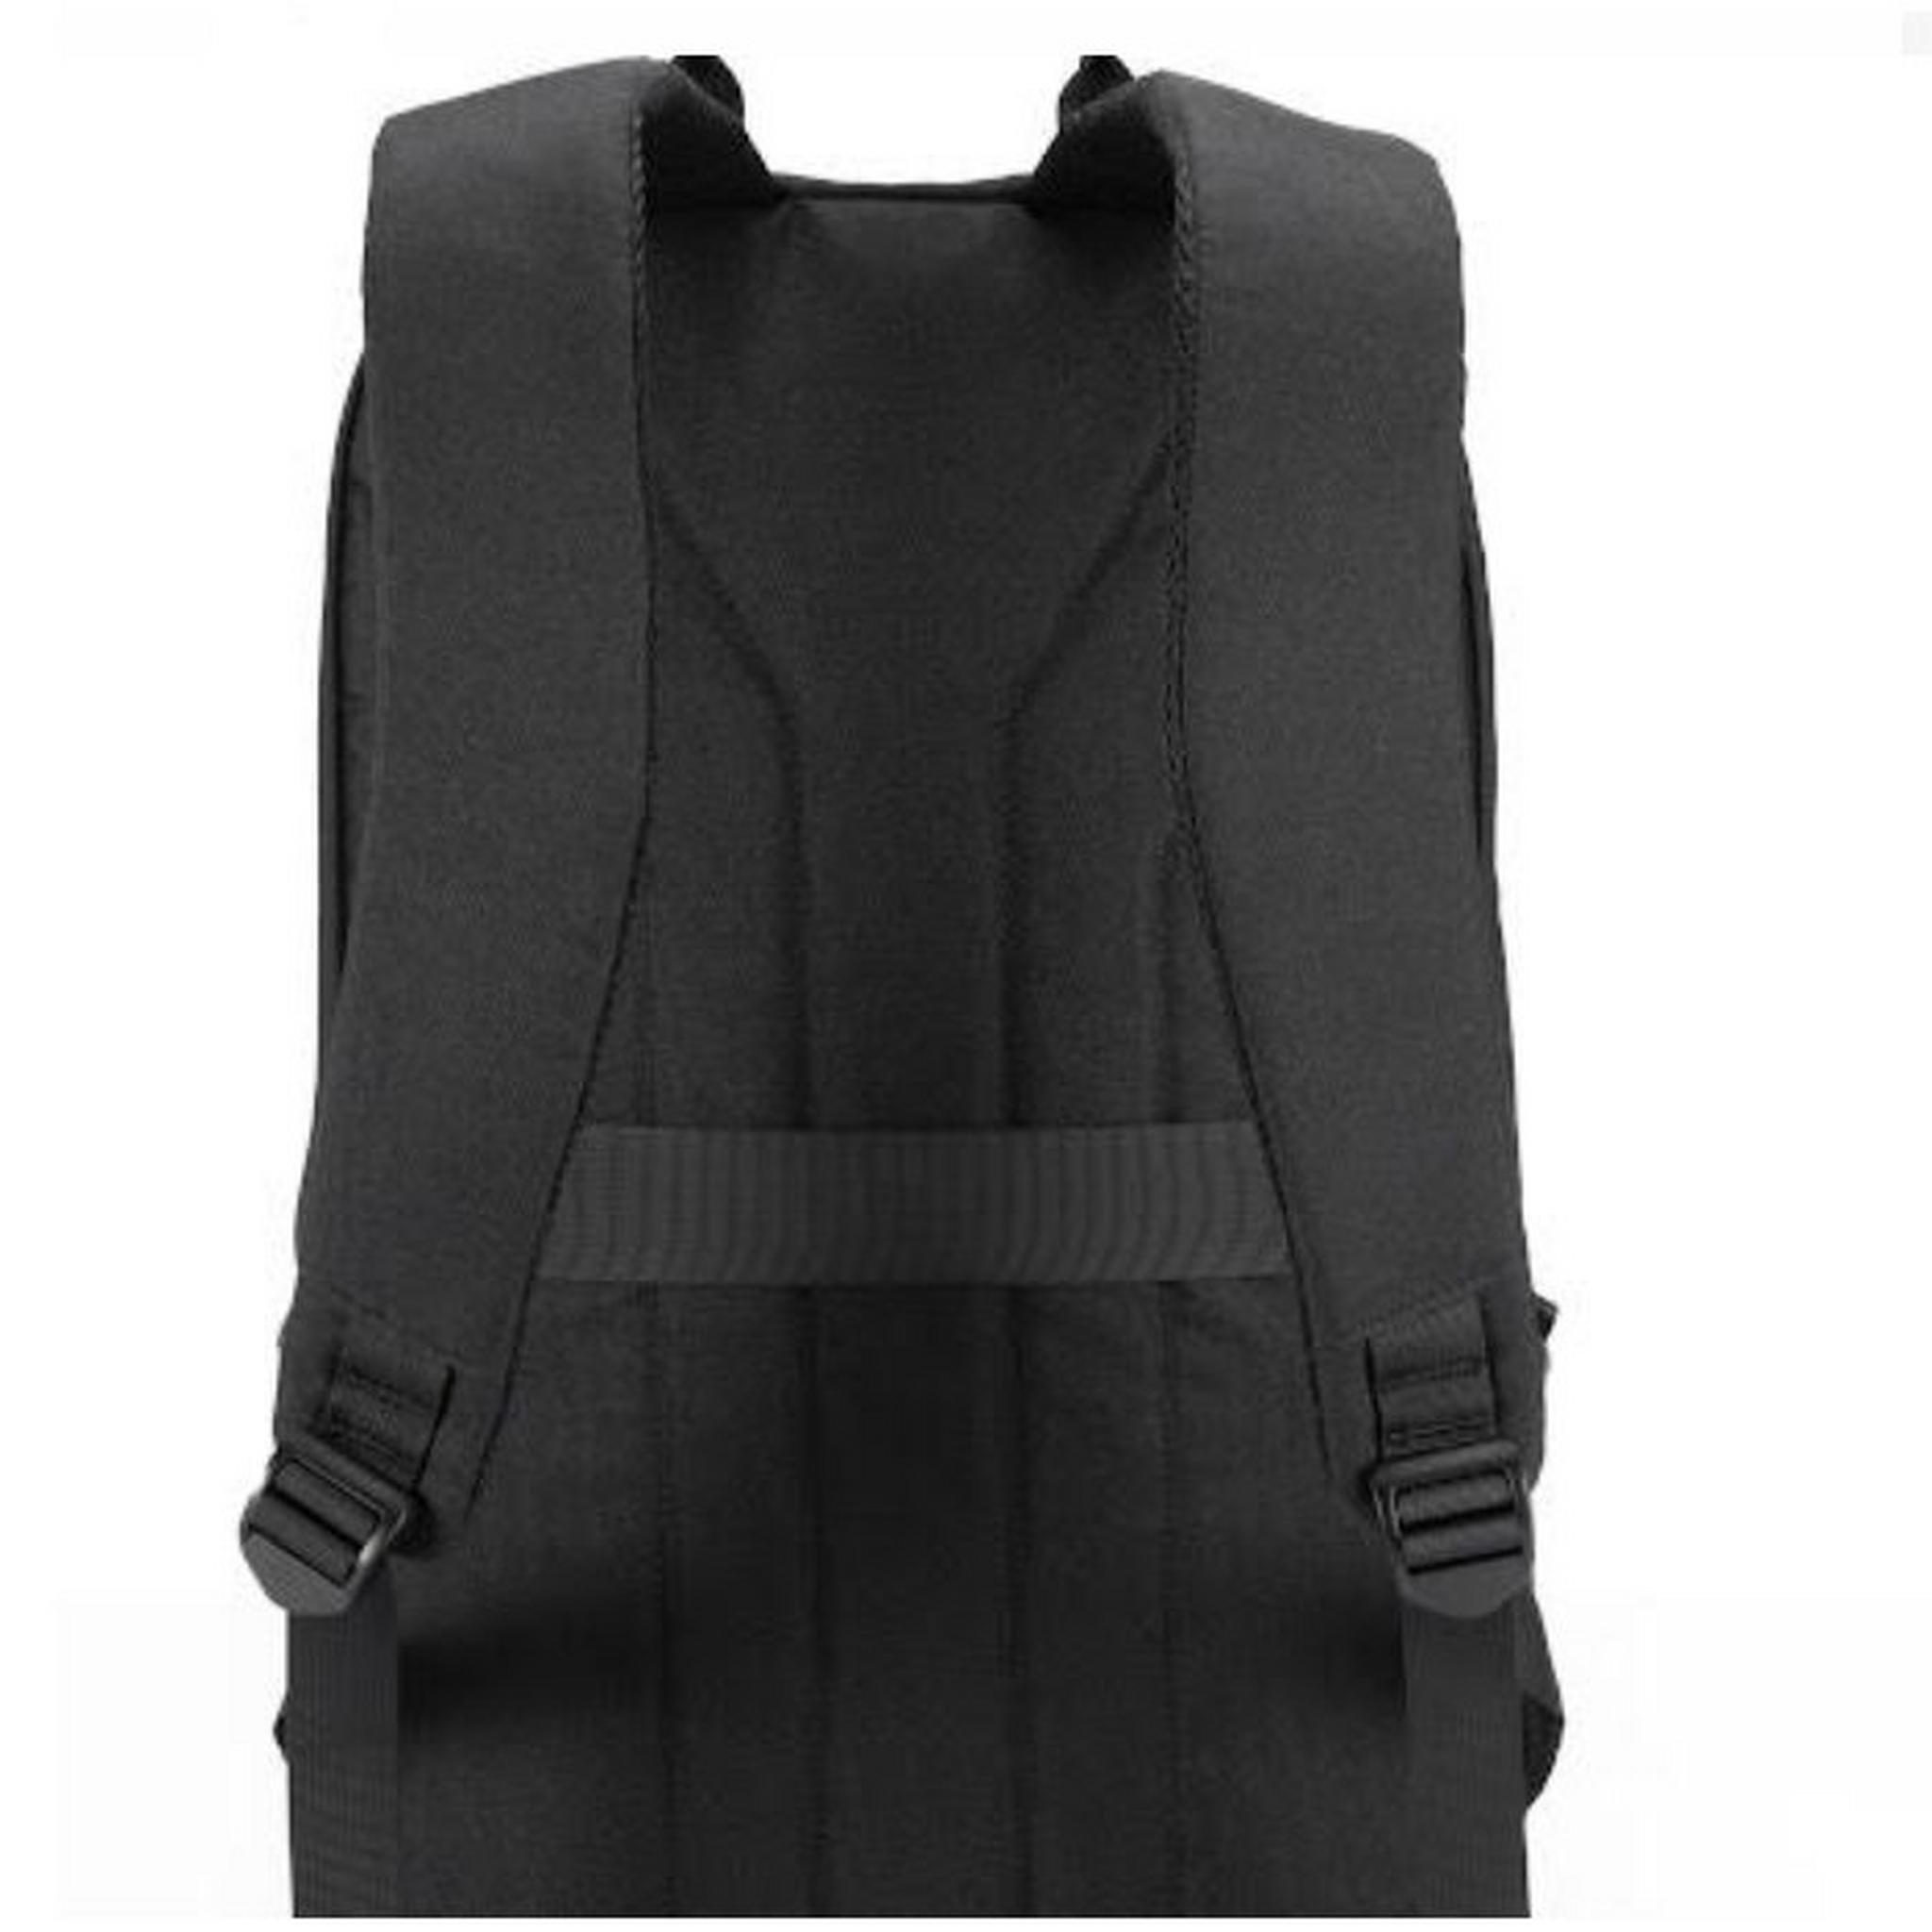 Stash 15.6-inch Laptop Backpack, K9920W – Black